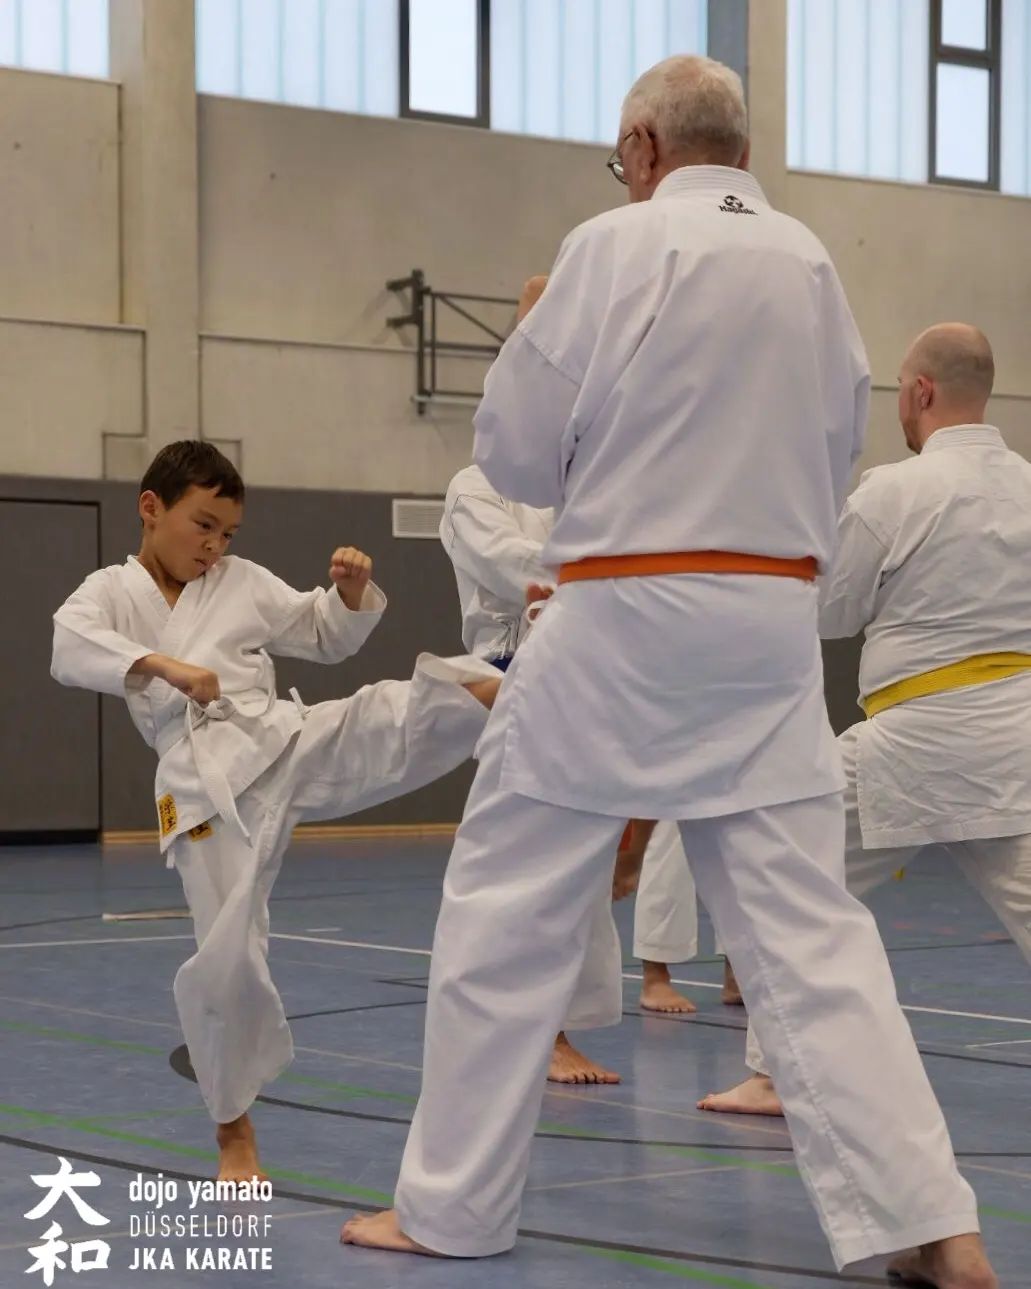 Training im Dojo Yamato Düsseldorf e.V.🥋
.
.
.
.
..
#karate #training #fun #jka #djkb #kihon #kata #kumite #düsseldorf #duesseldorf #japan #sport #sportmotivation #shotokan #traditional #nrw #yamatoduesseldorf #fitness #fitnessmotivation #jkaKarate #jkakaratedo #neuss #ratingen #hilden #leverkusen #kaarst #selbstbstbewusstsein #selbstvertrauen